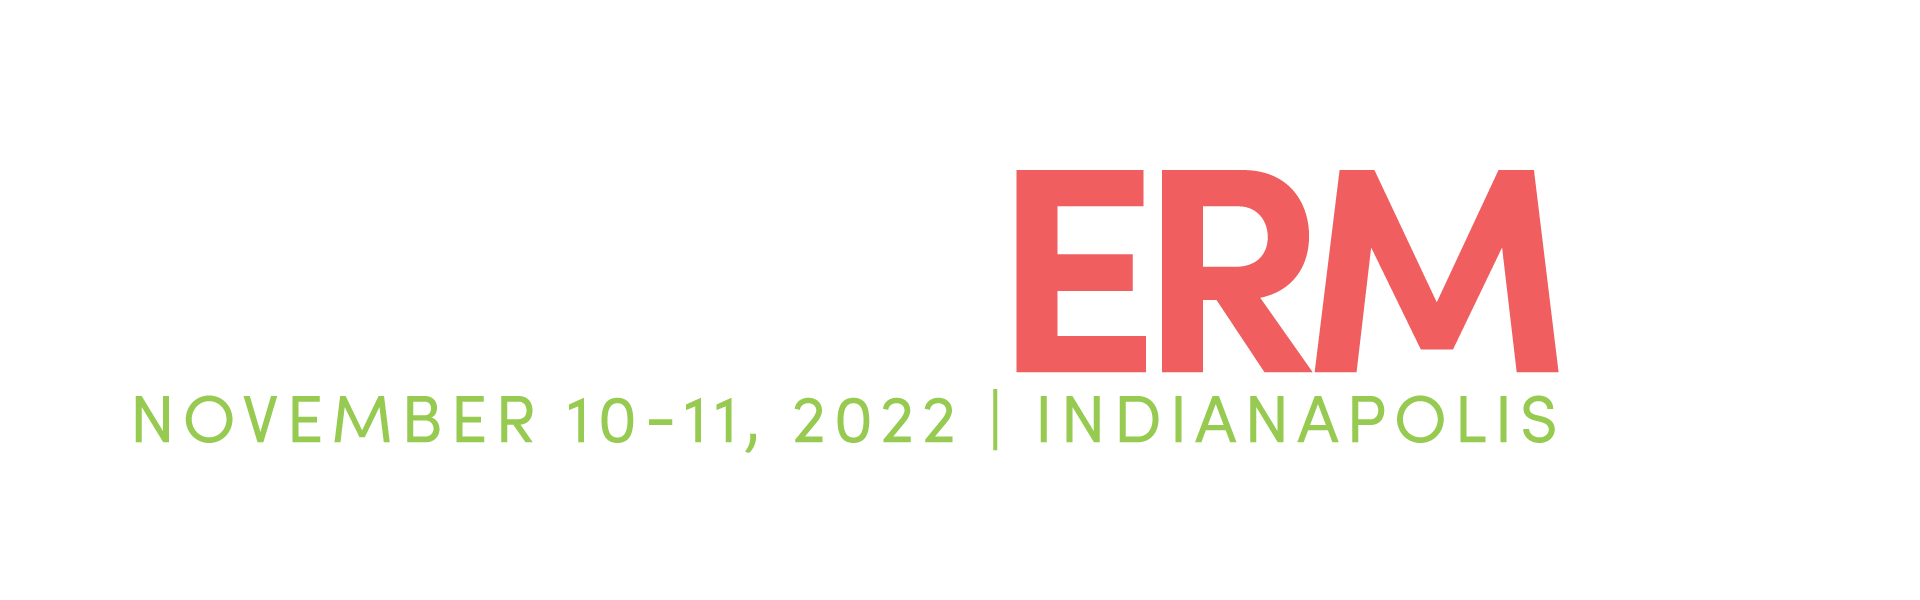 RIMS ERM, Nov 10-11, Indianapolis